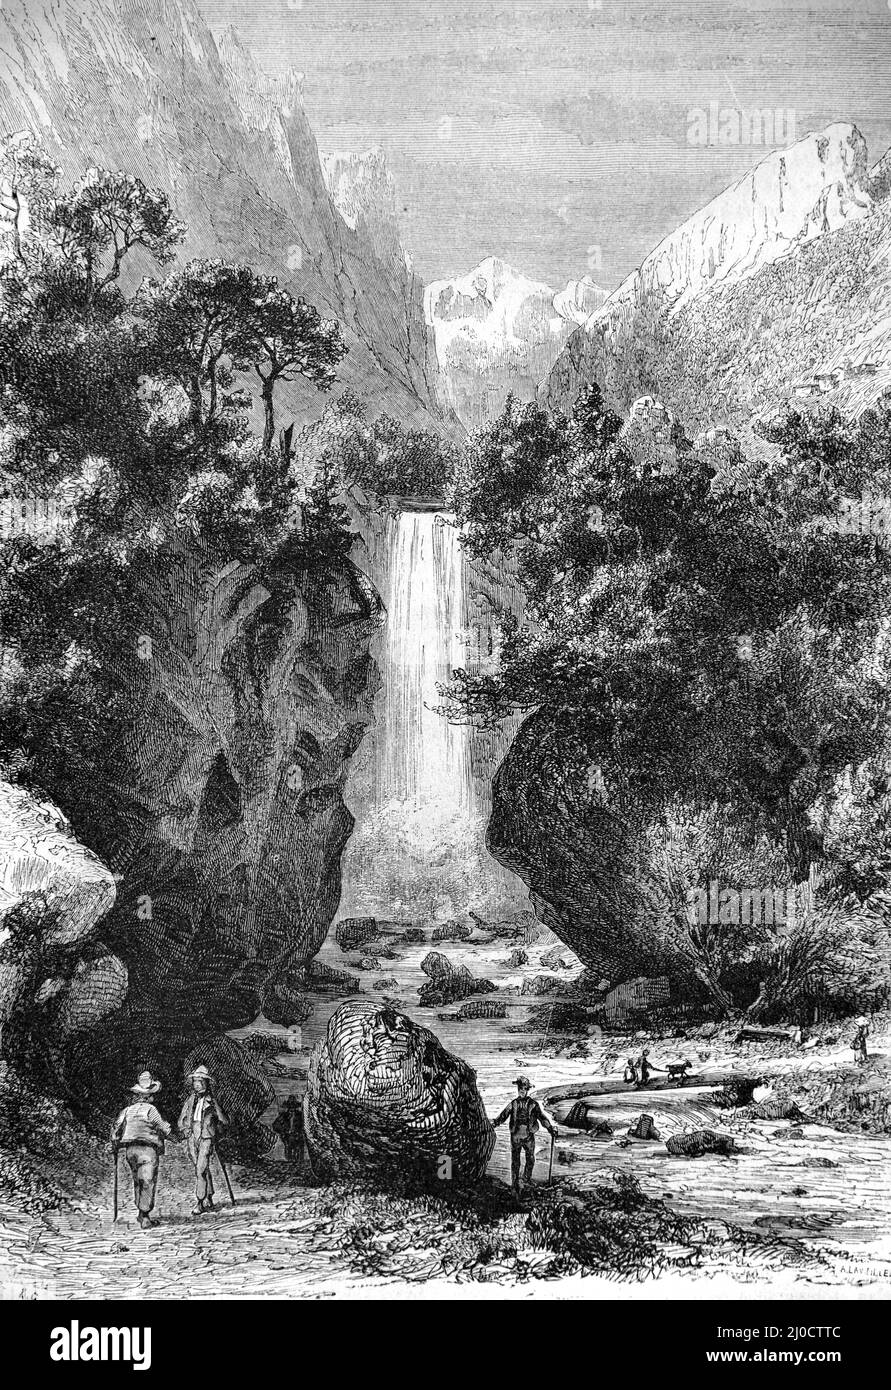 Wasserfall Chute de la Druise, Schlucht Omblèze, am Fluss Gervanne im Regionalen Naturpark Massif du Vercors Drôme Frankreich. Vintage Illustration oder Gravur 1860. Stockfoto